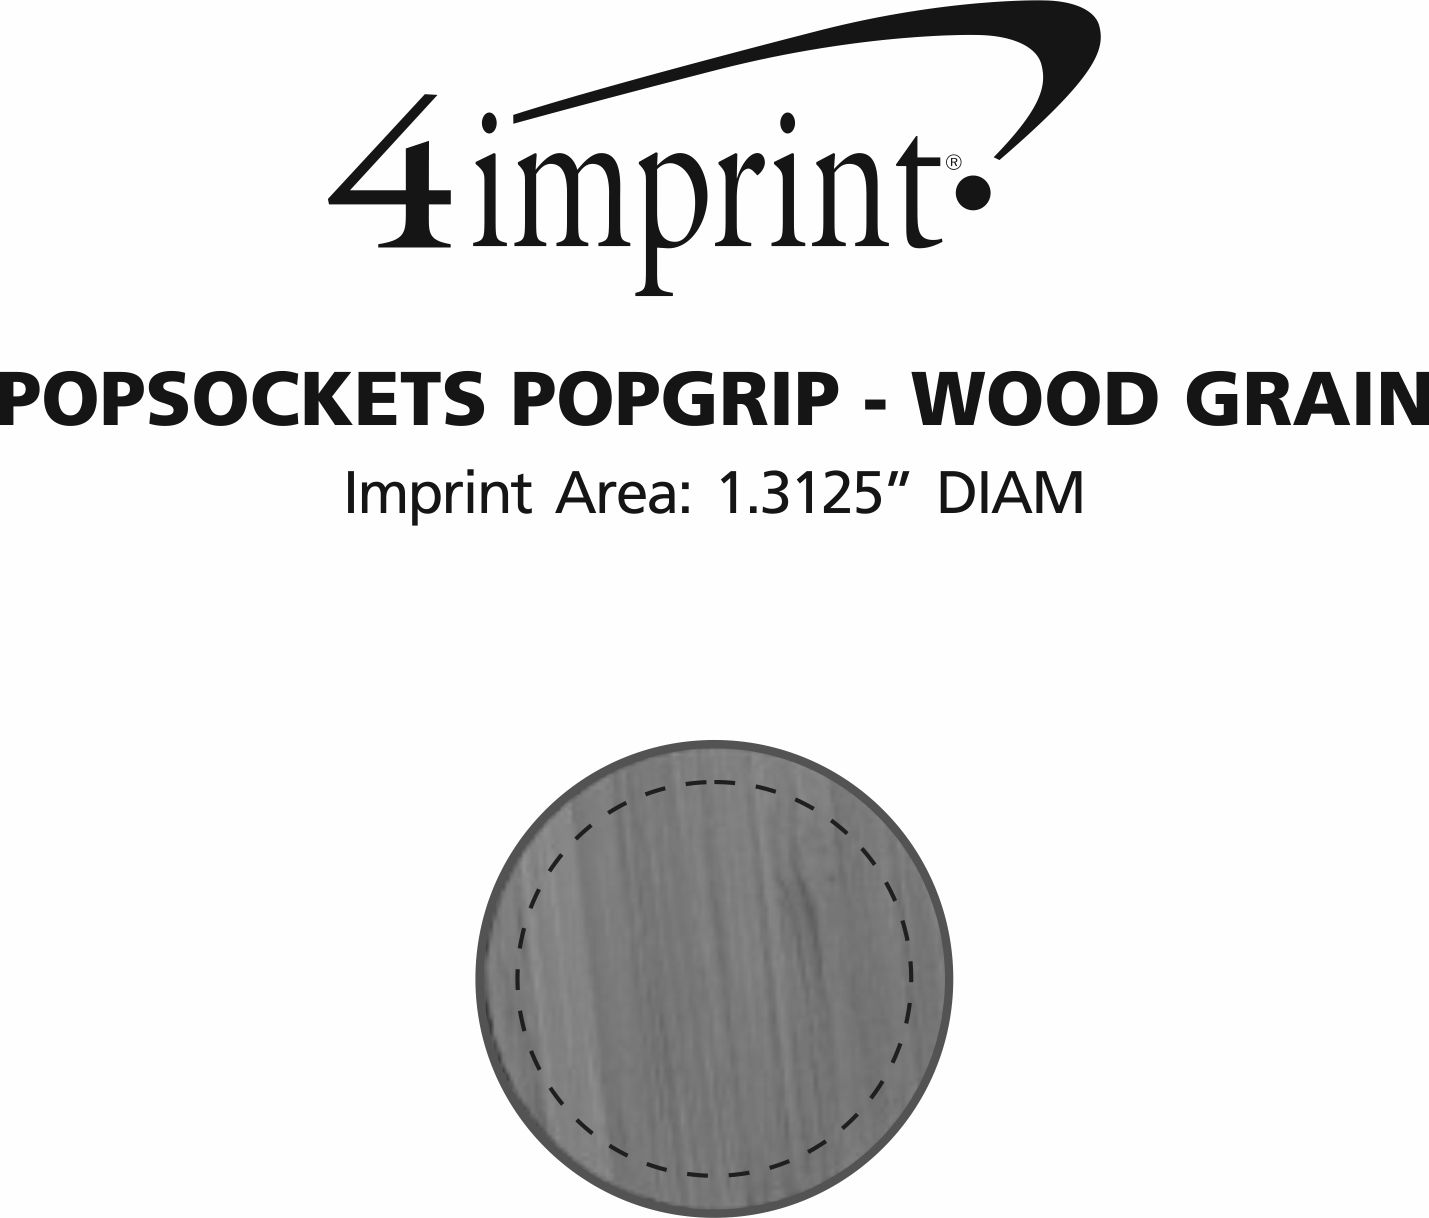 Imprint Area of PopSockets PopGrip - Wood Grain